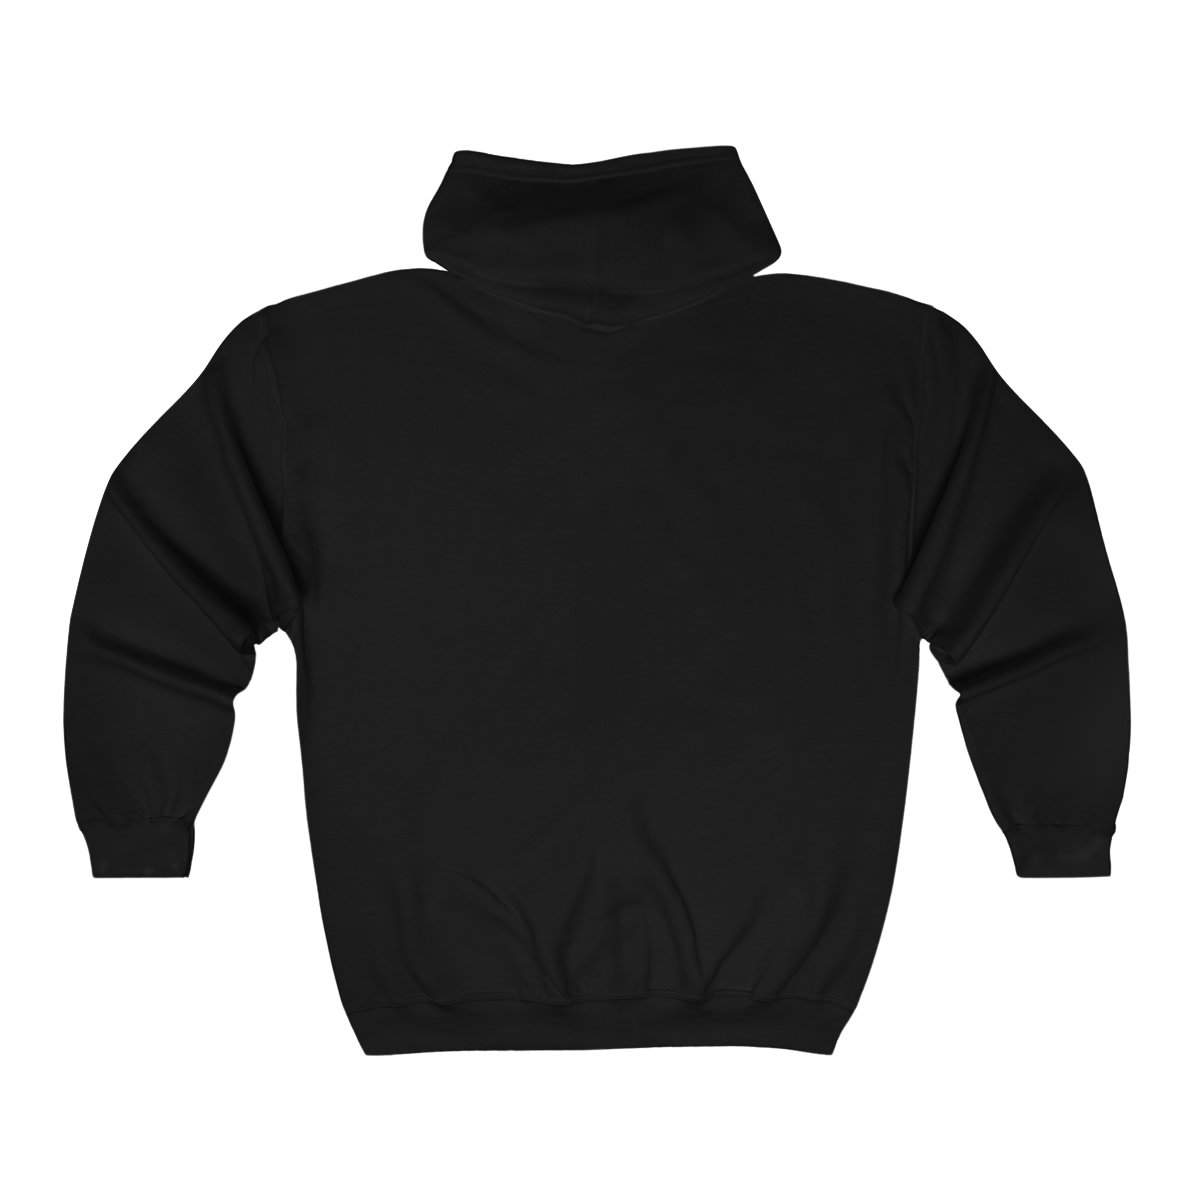 Sanctuary International – The-ol-o-gy Full Zip Hooded Sweatshirt